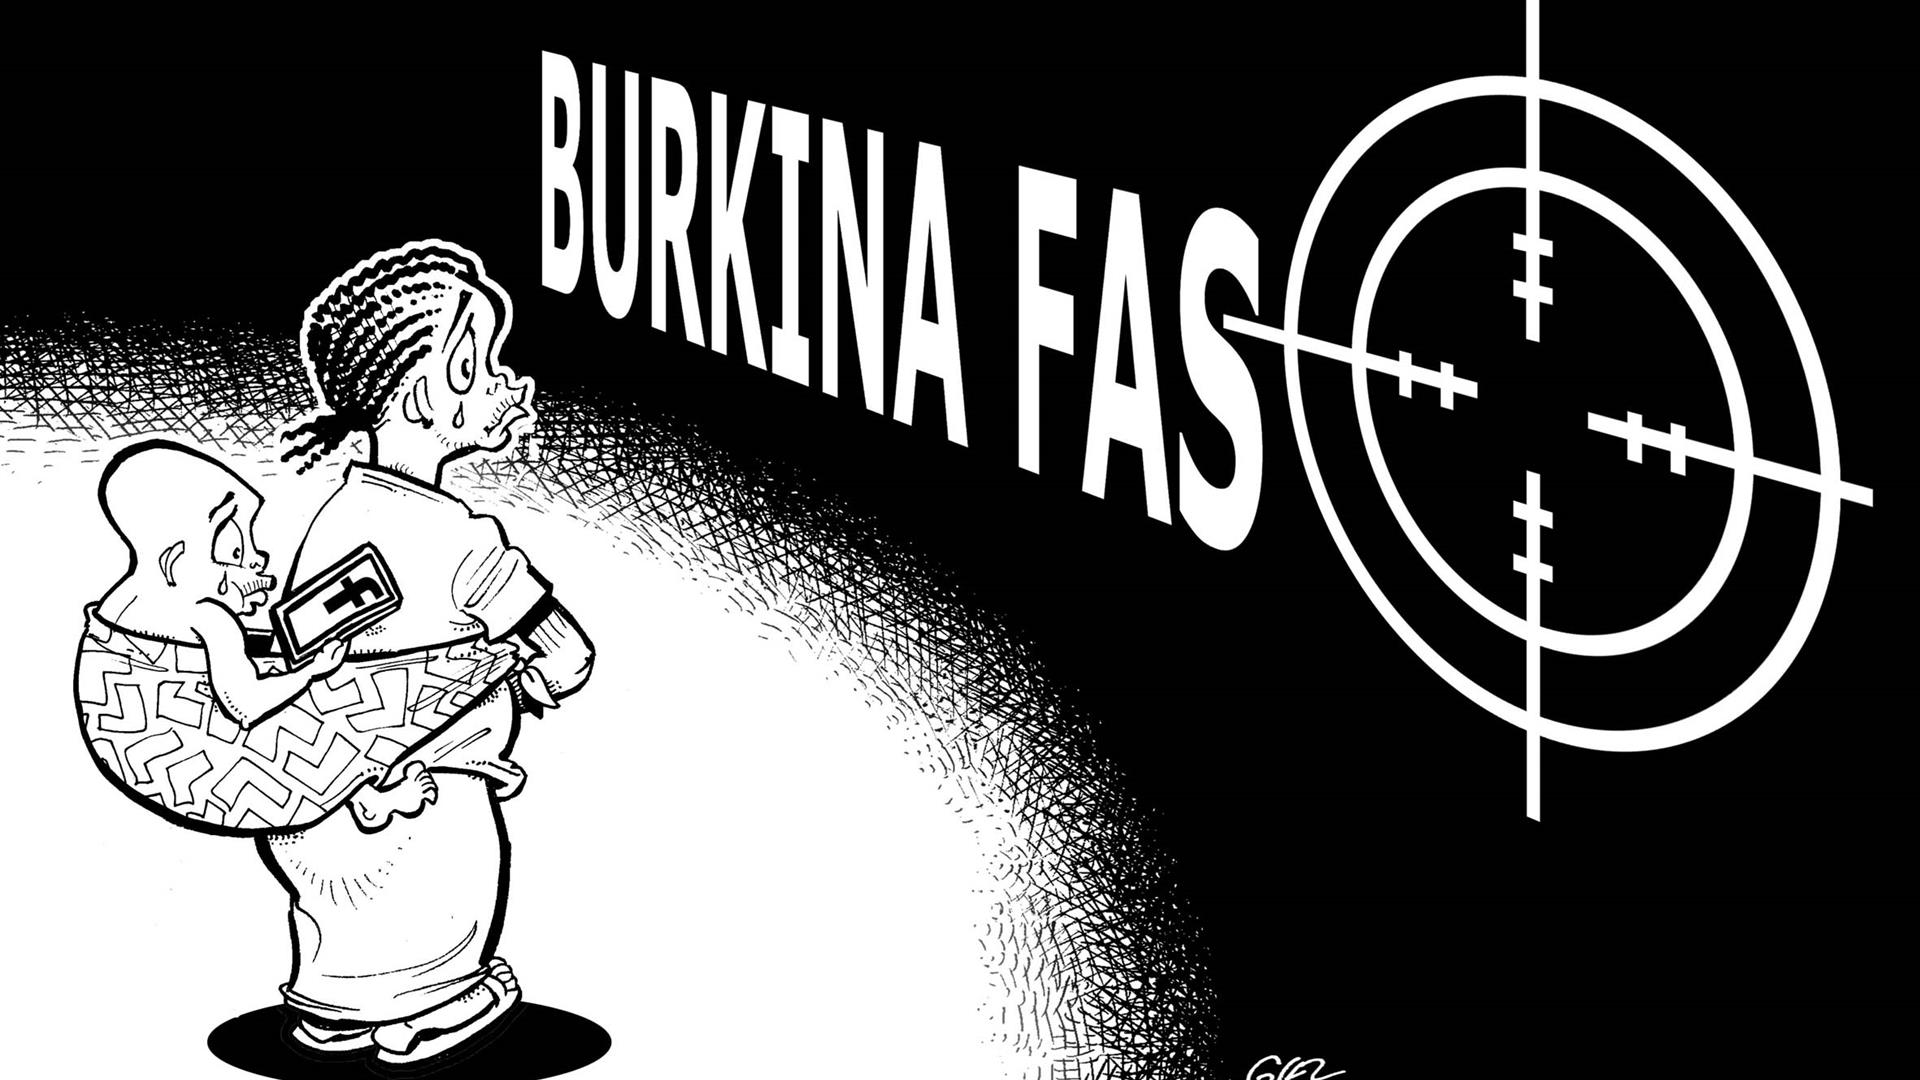 Attentat Burkina